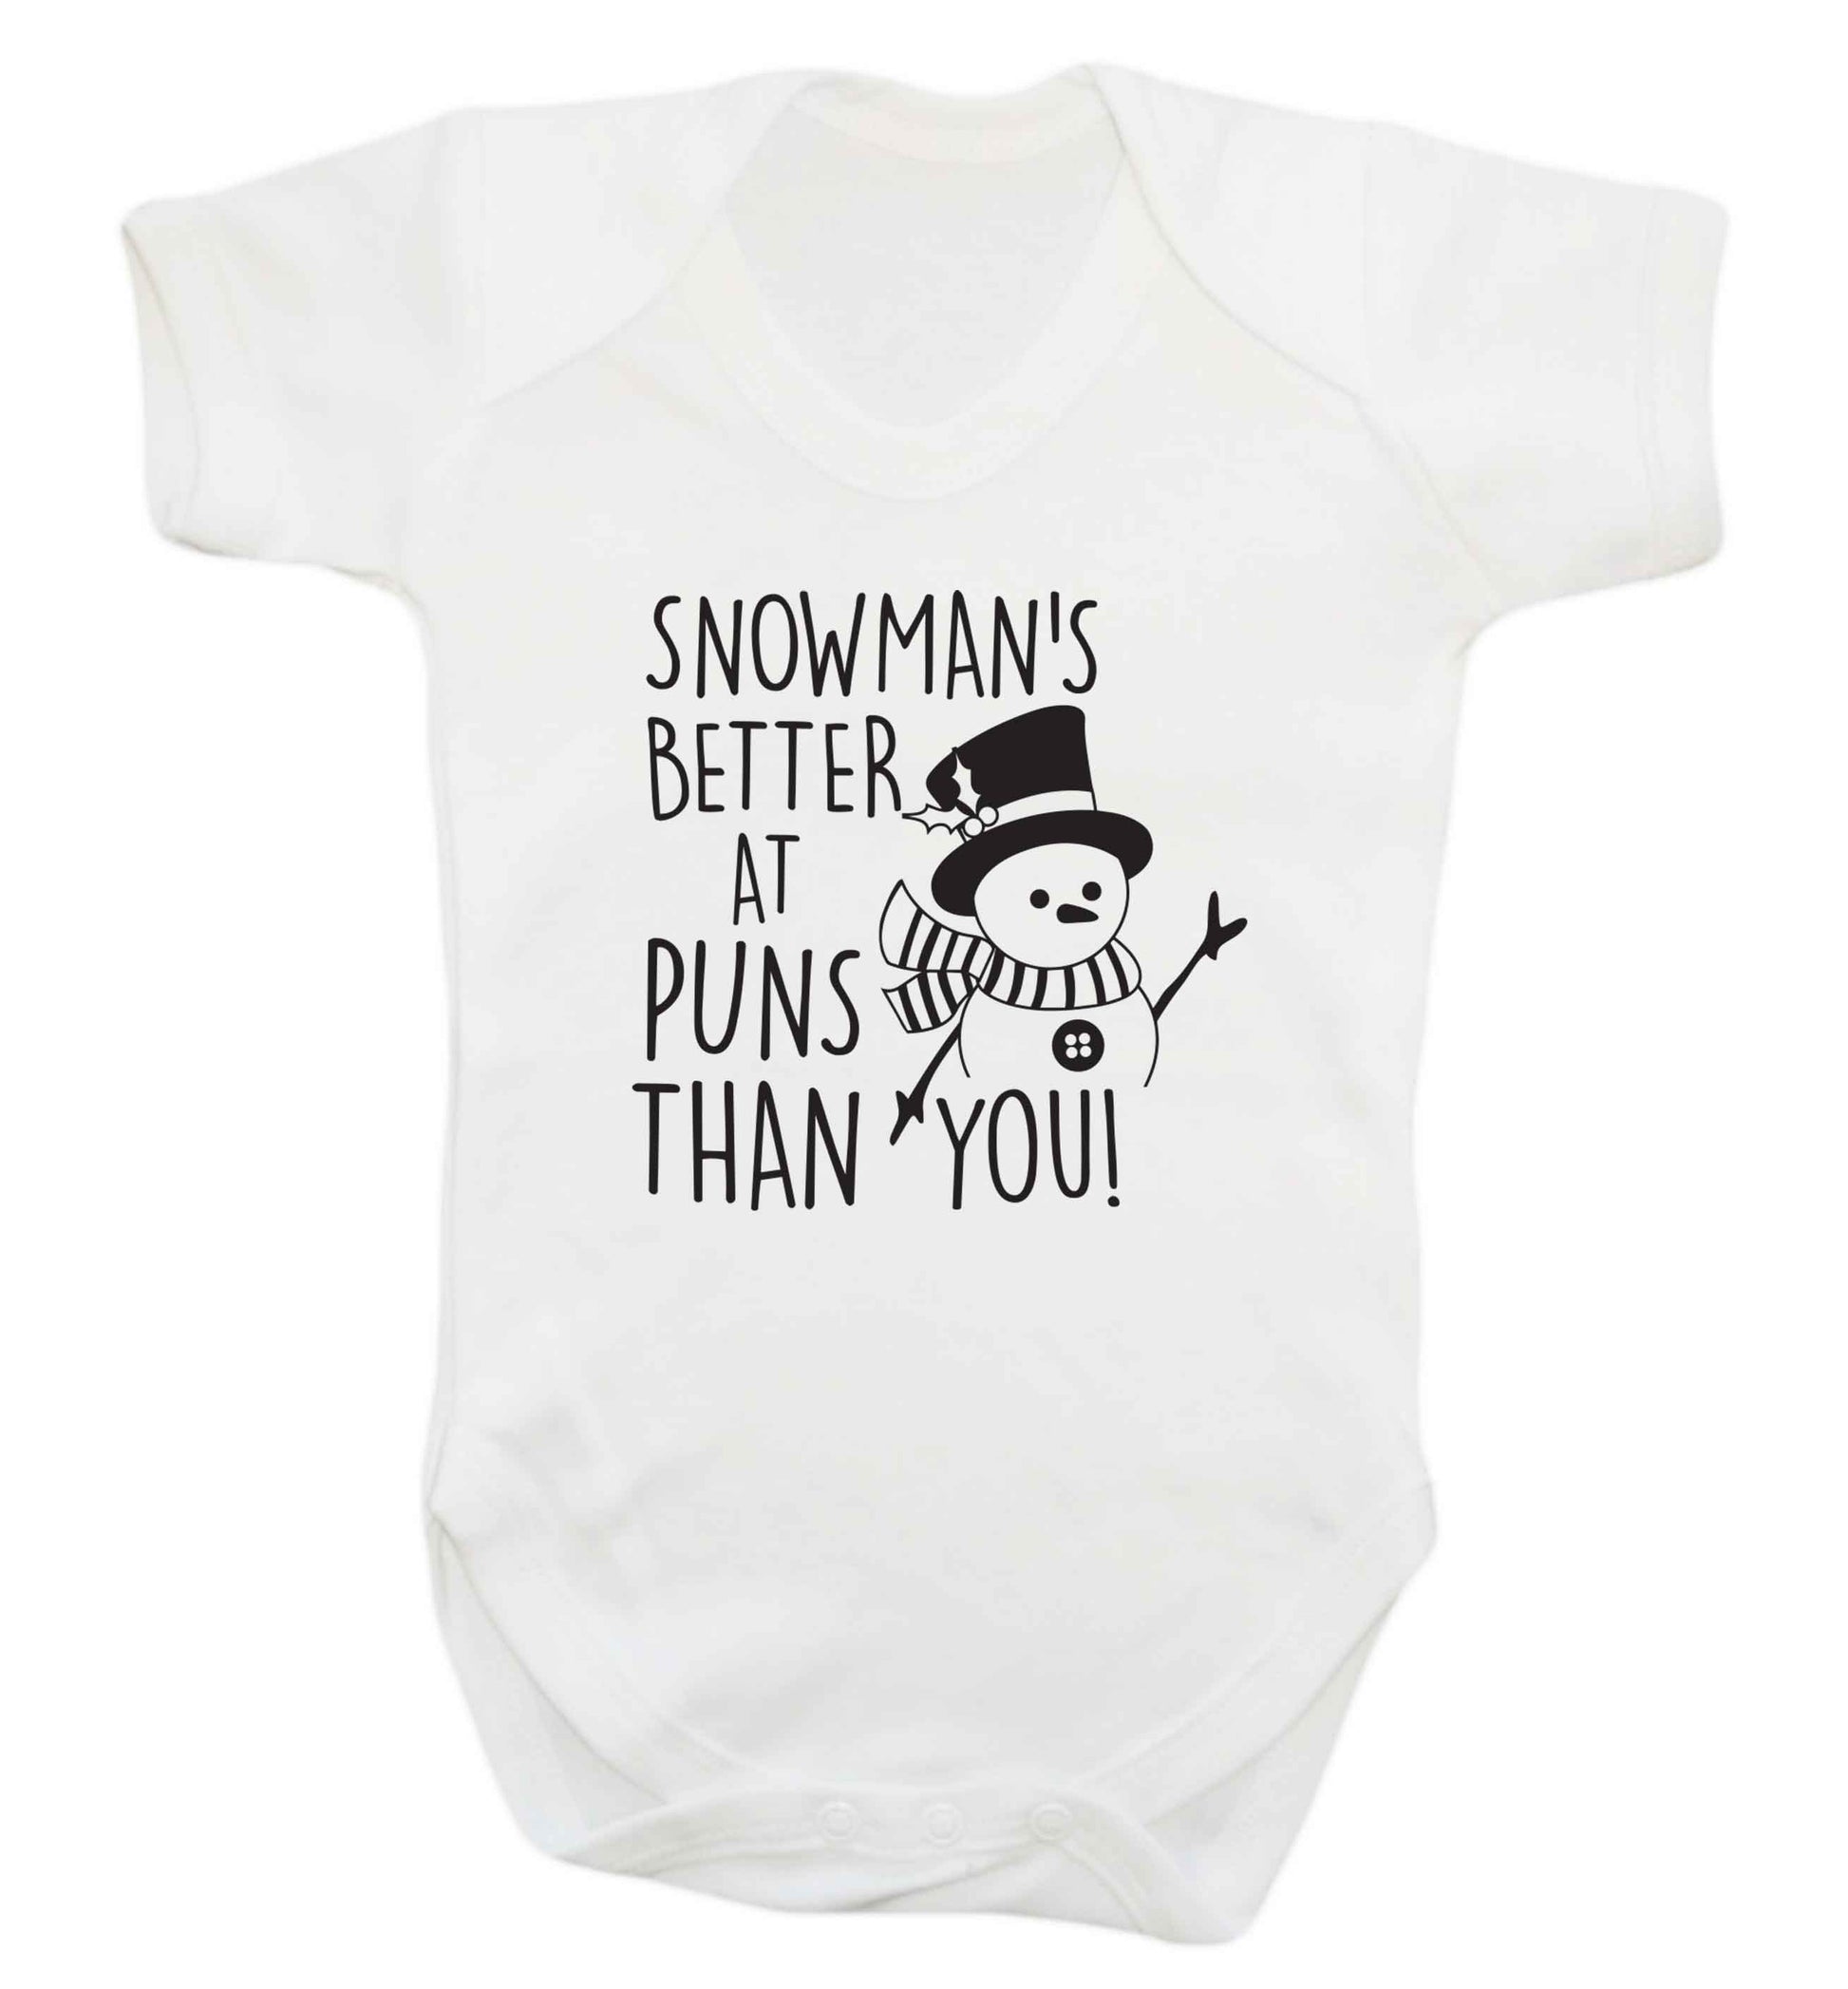 Snowman's Puns You baby vest white 18-24 months